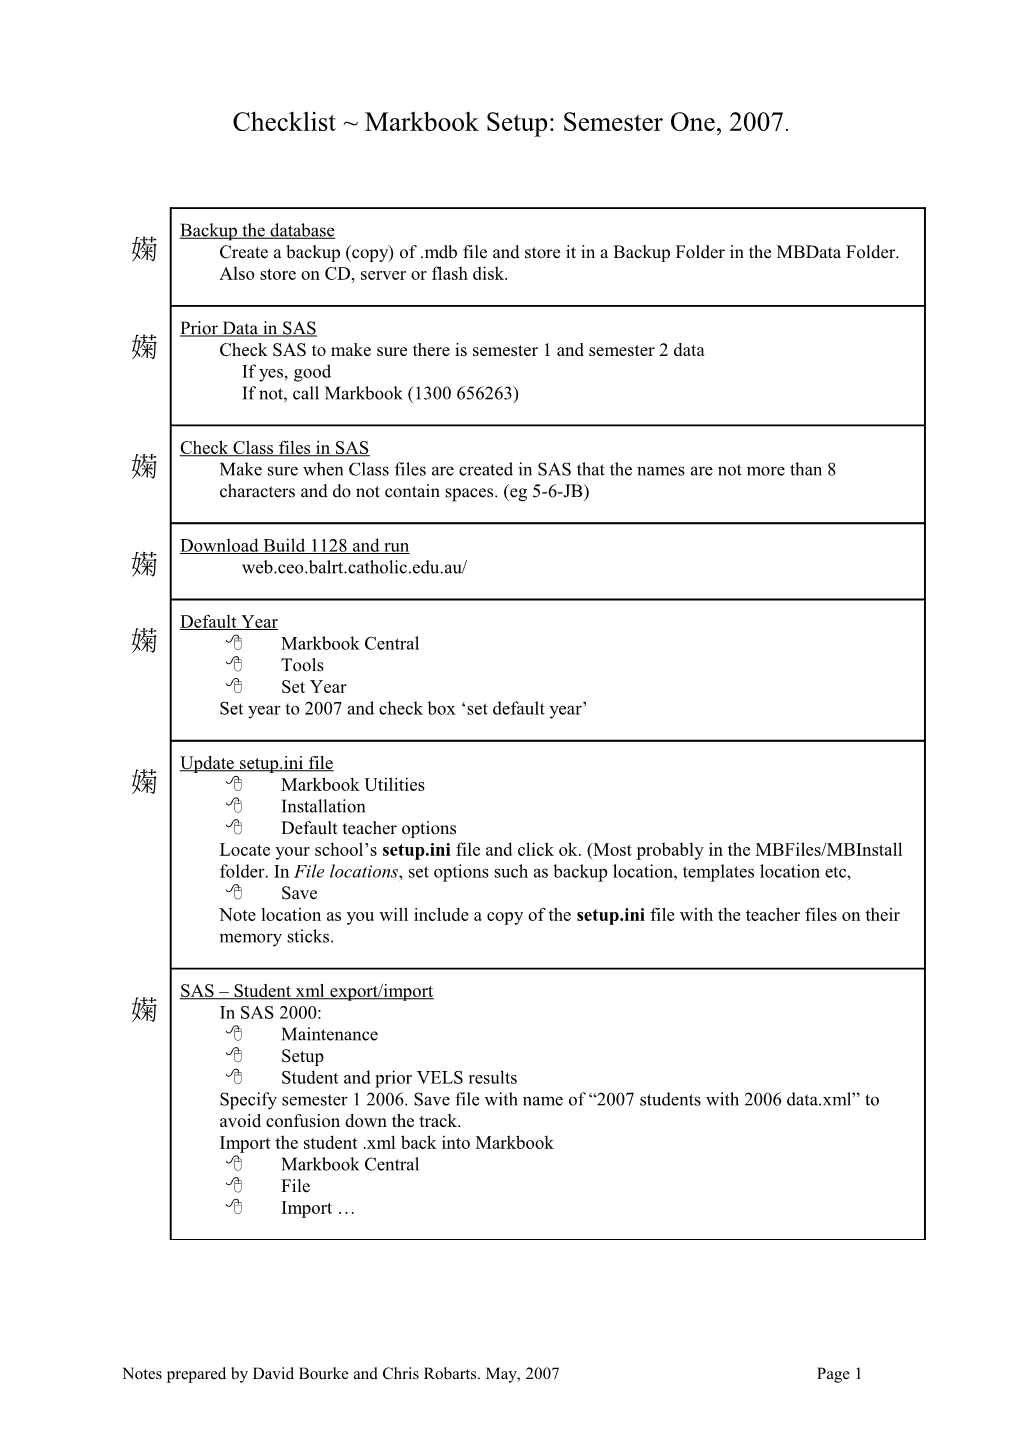 Checklist Markbook Setup: Semester One, 2007